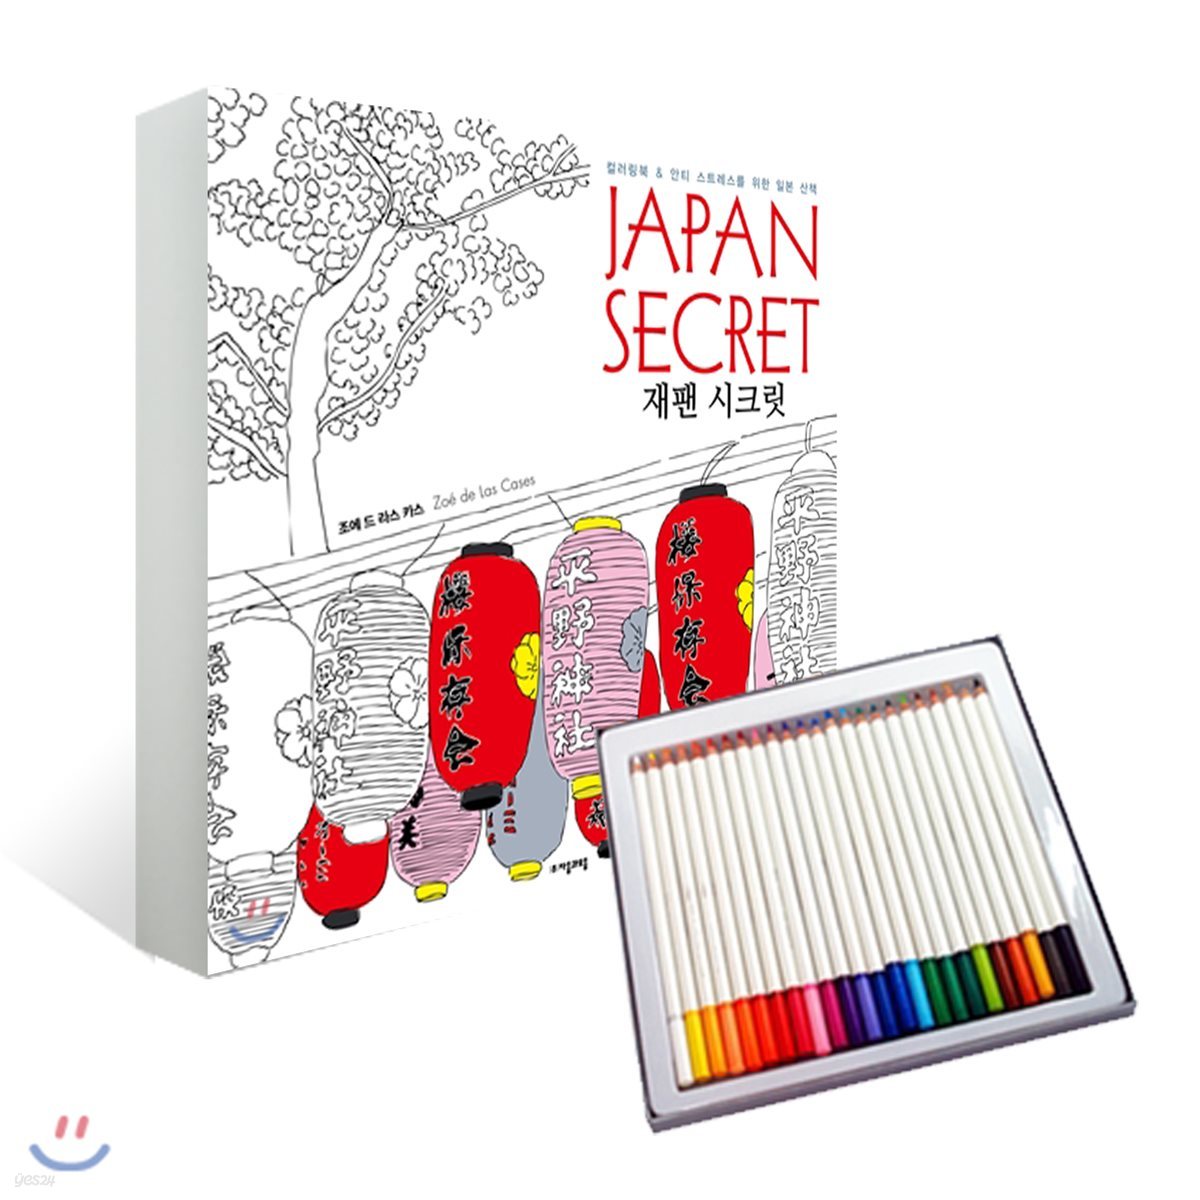 Japan Secret 재팬 시크릿 + 동아 파블 24색 오일 색연필